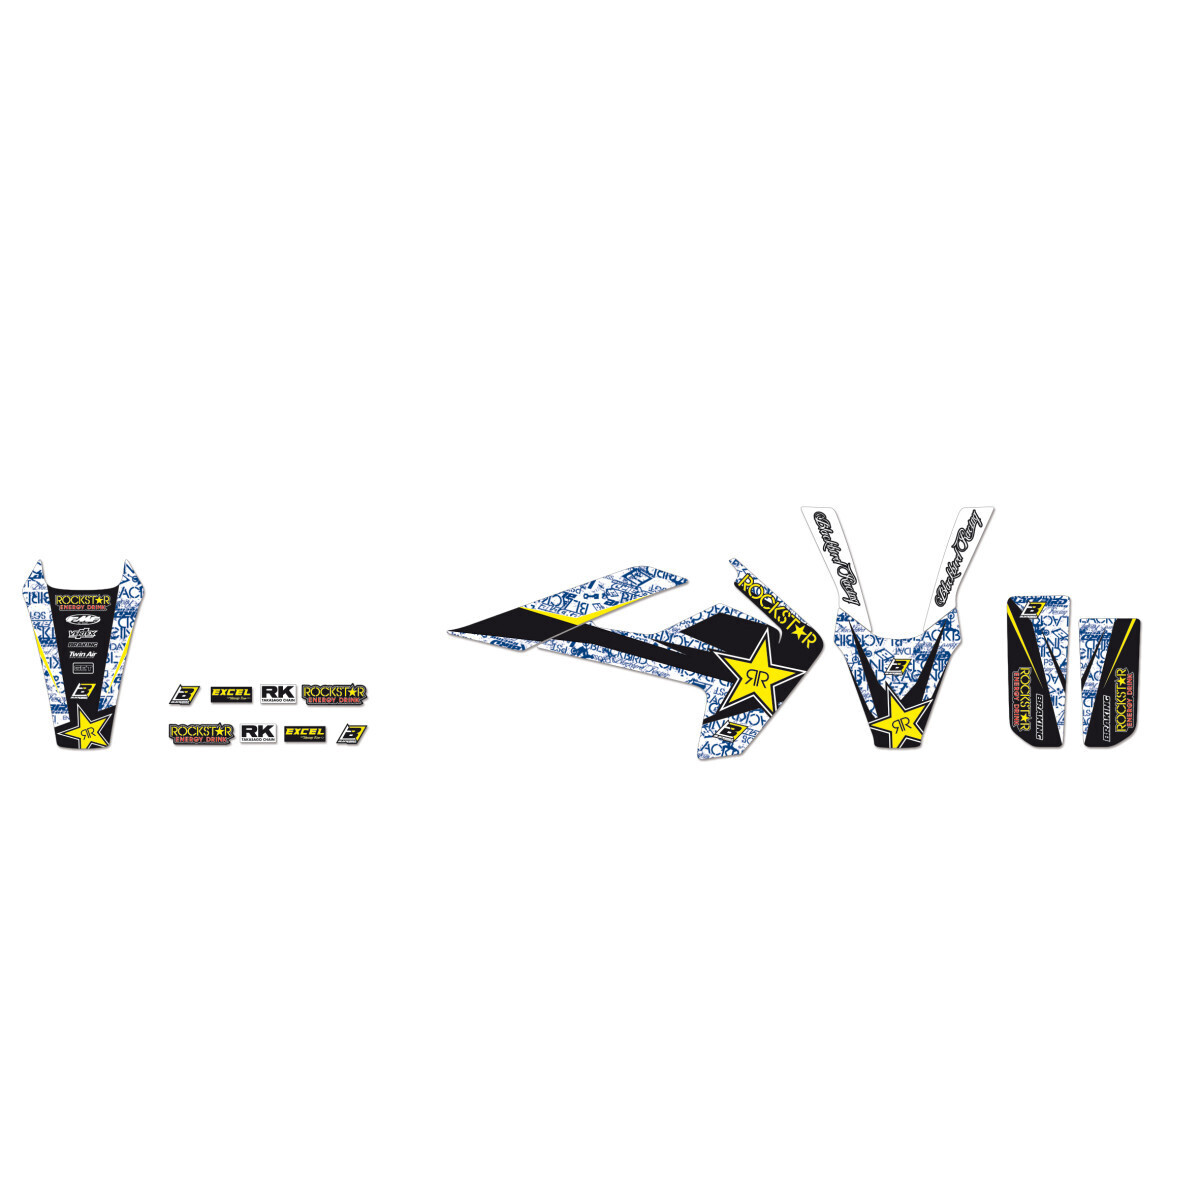 BLACKBIRD RACING
ROCKSTAR ENERGY GRAPHIC KIT BLACK/WHITE/BLUE/YELLOW HUSQVARNA FC